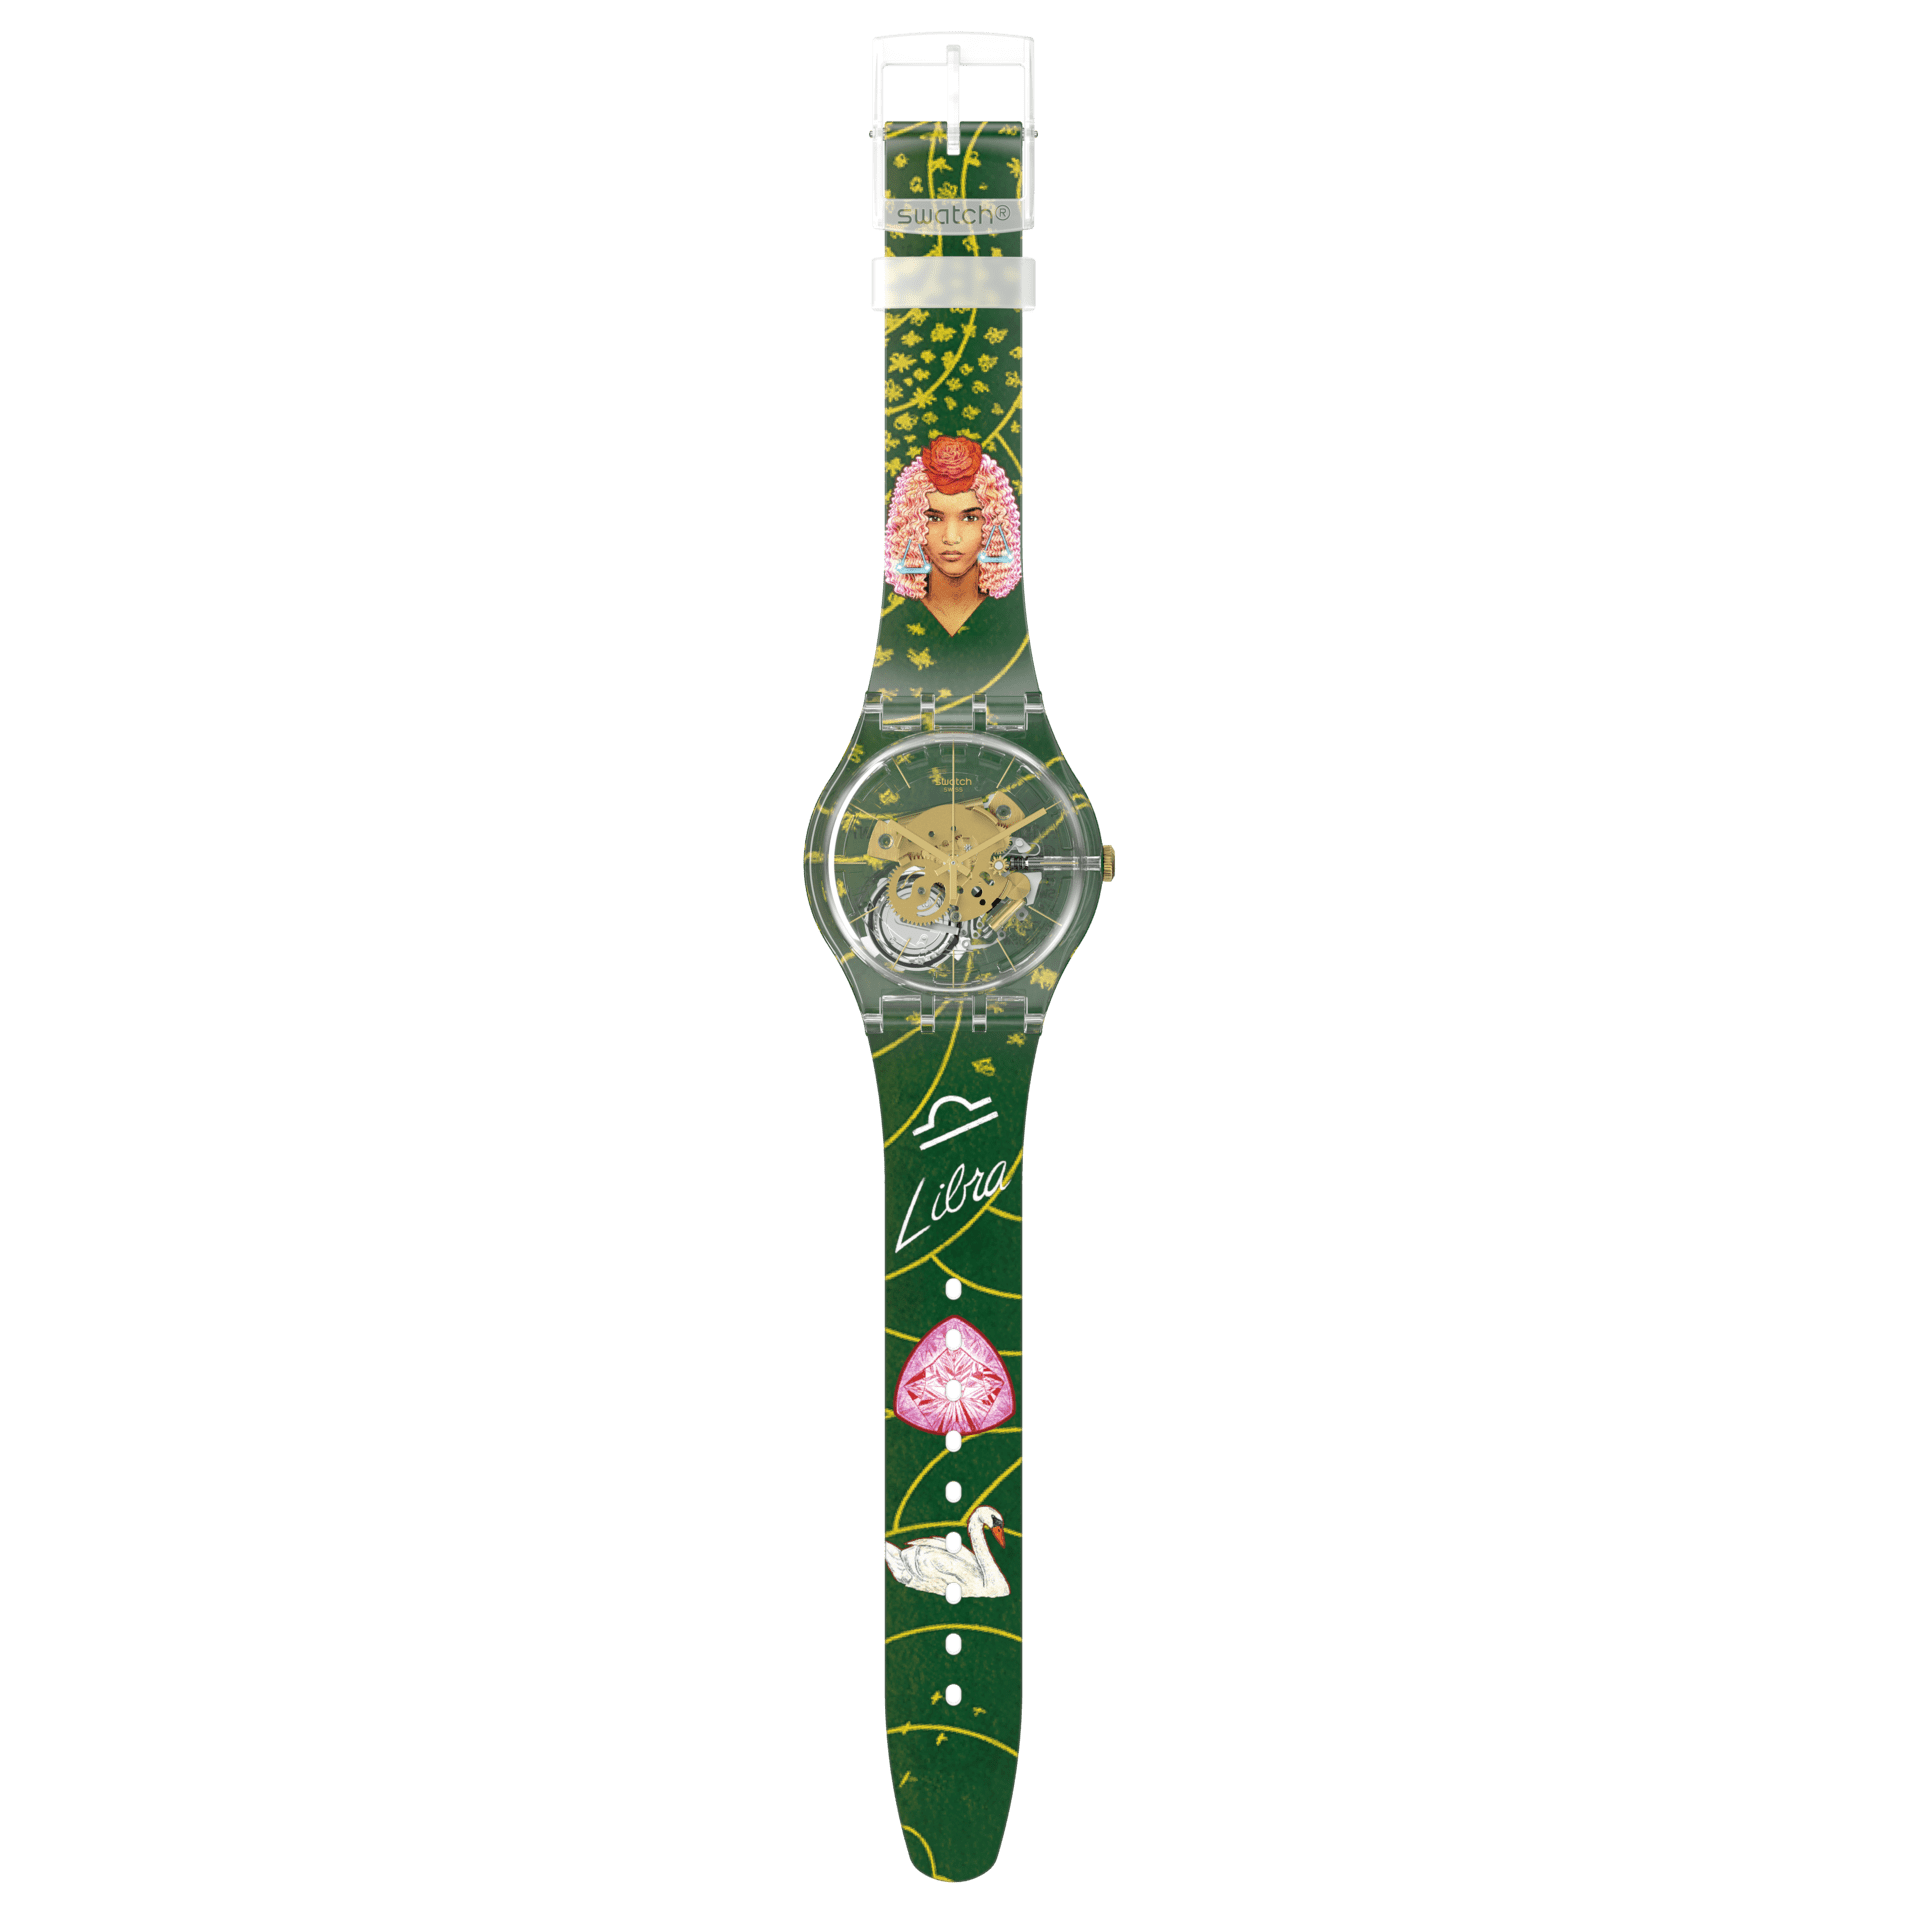 Seah Zodiac Sign Libra Limited Edition Luxury Diamond Croc Strap Watch 3102  | eBay